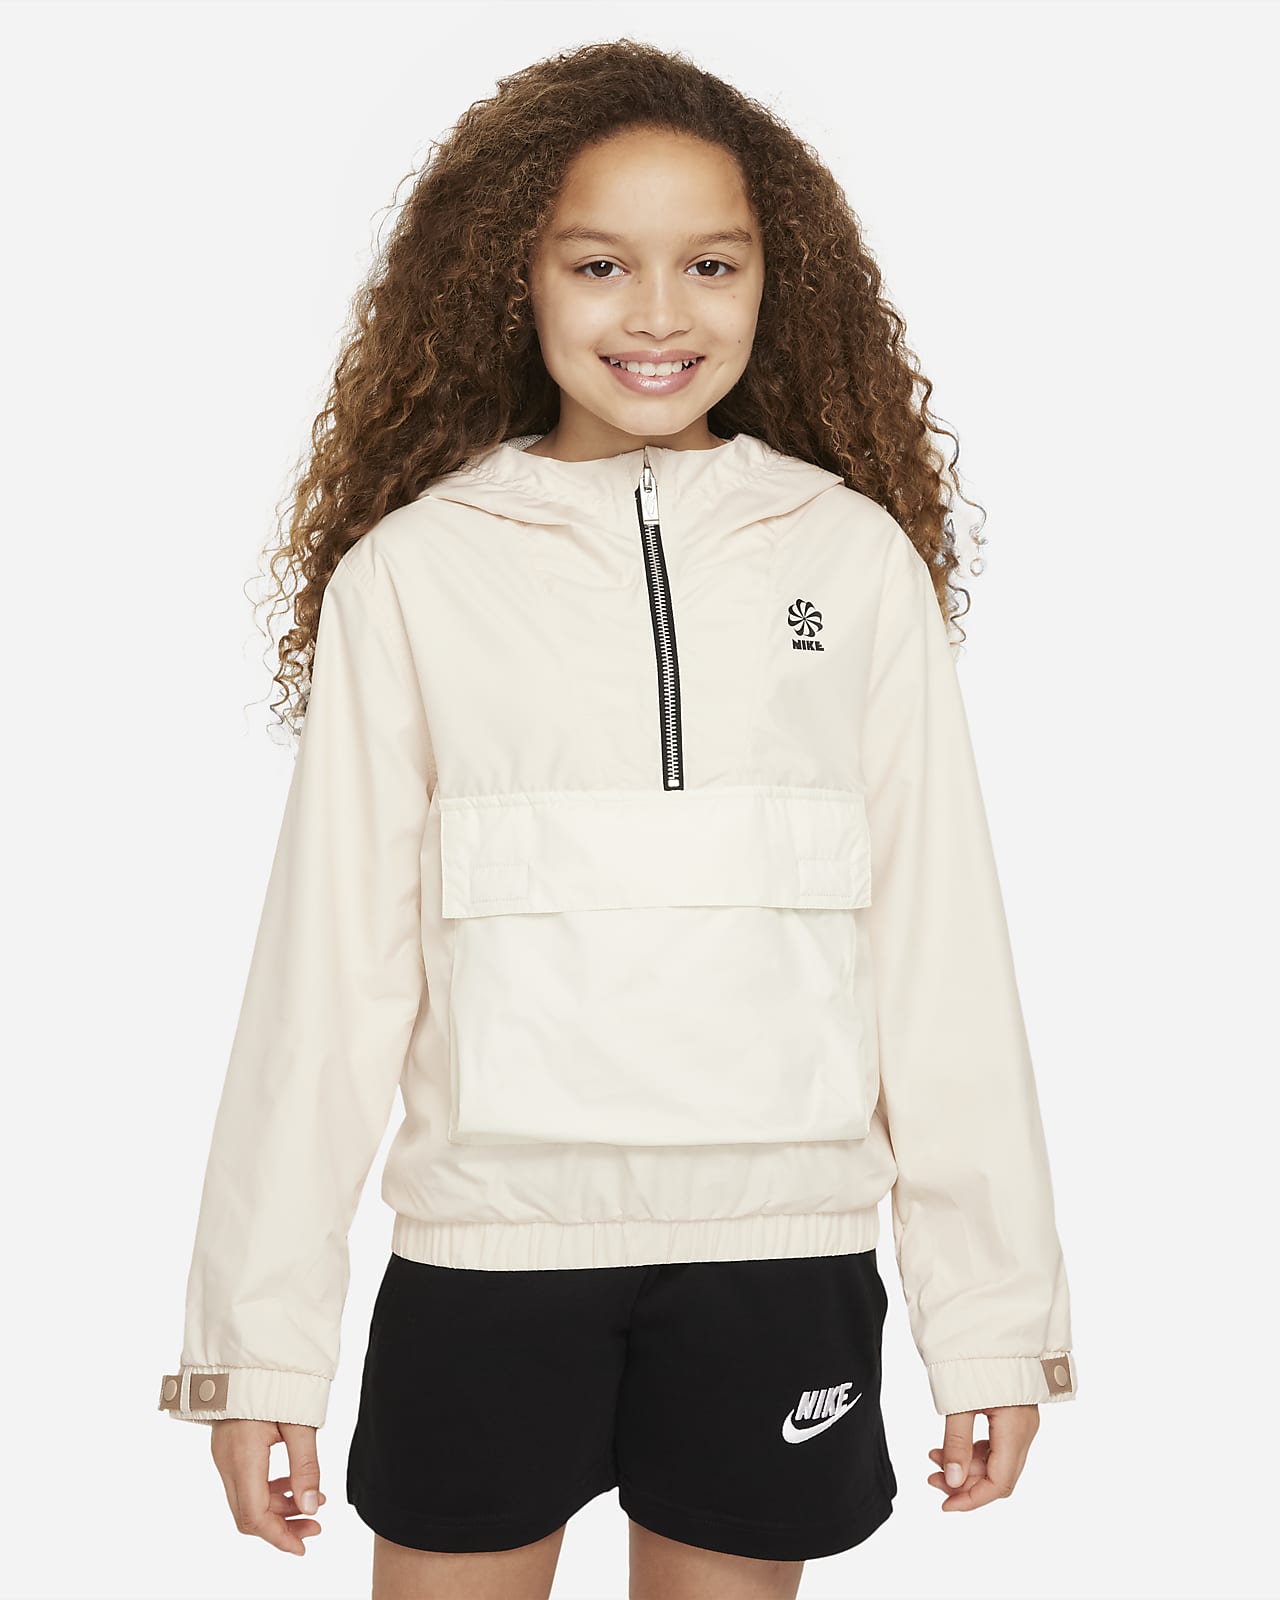 Nike Sportswear Circa 72 Jacke für ältere Kinder